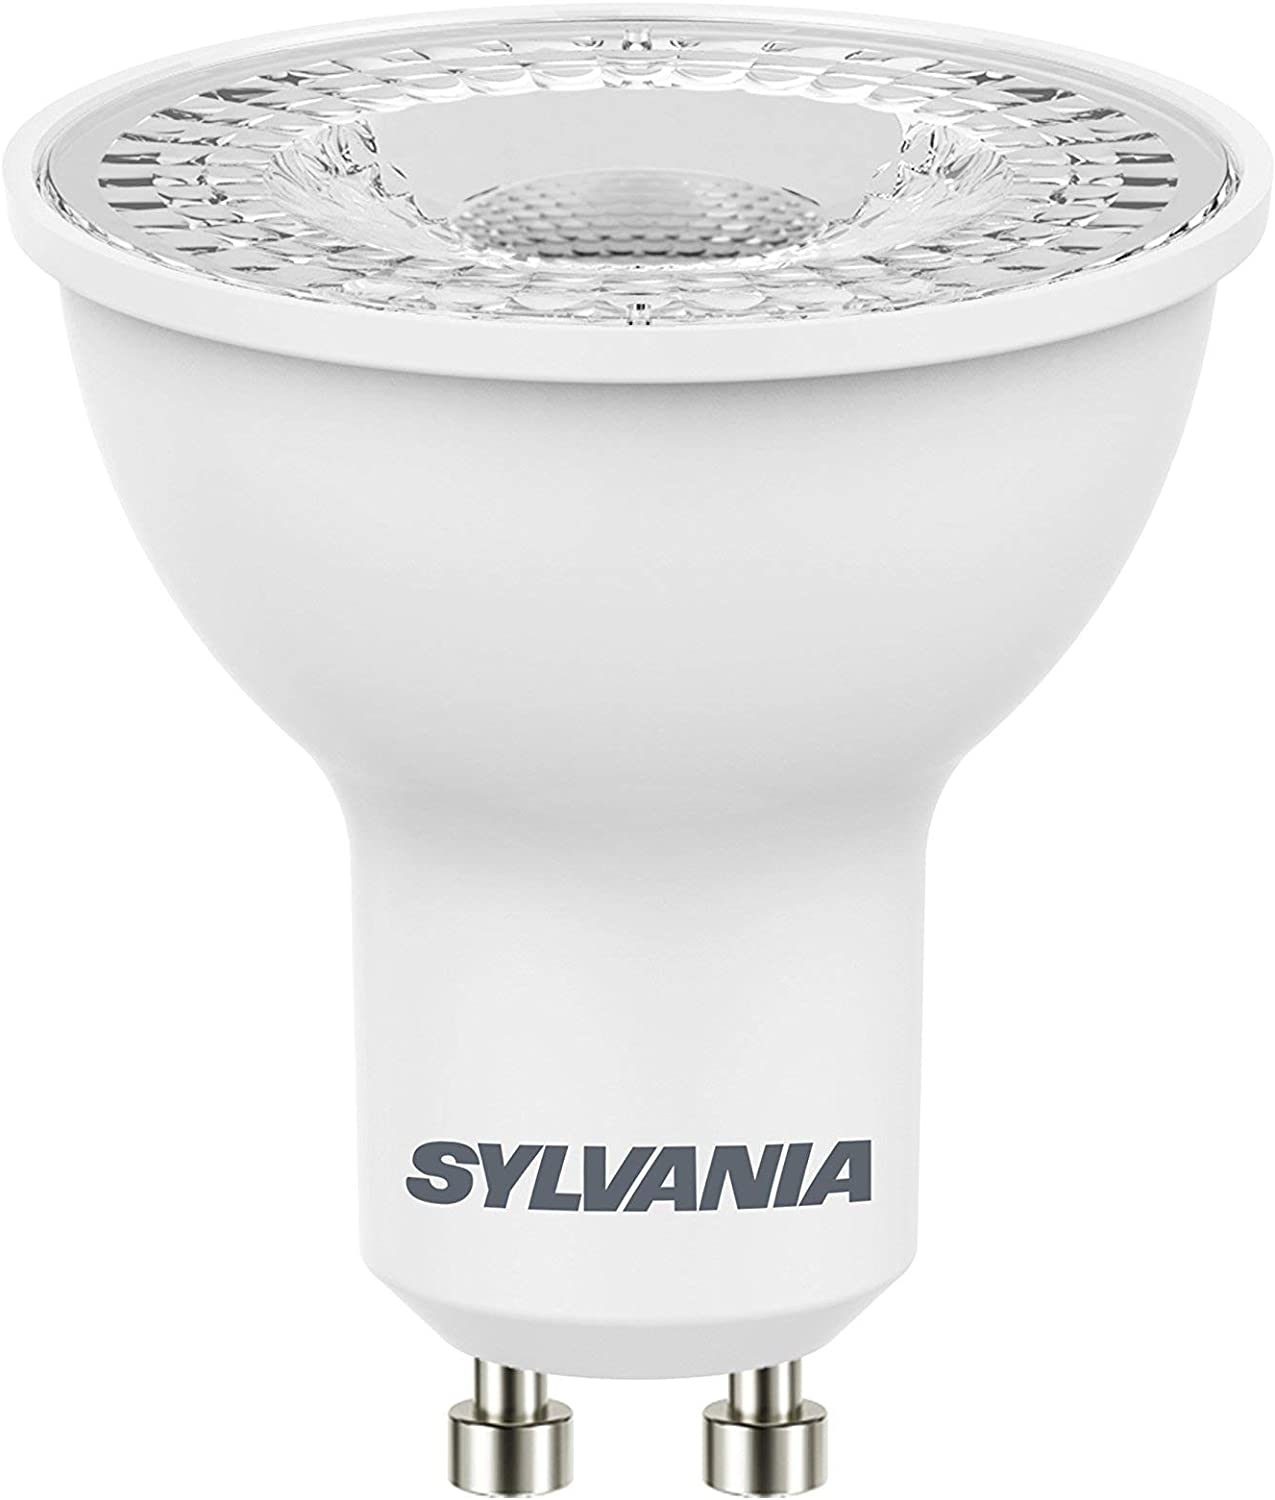 Sylvania Refled ES50 V4 GU10 LED Dimmable Bulb Lamps 5W GU10 36 Degree